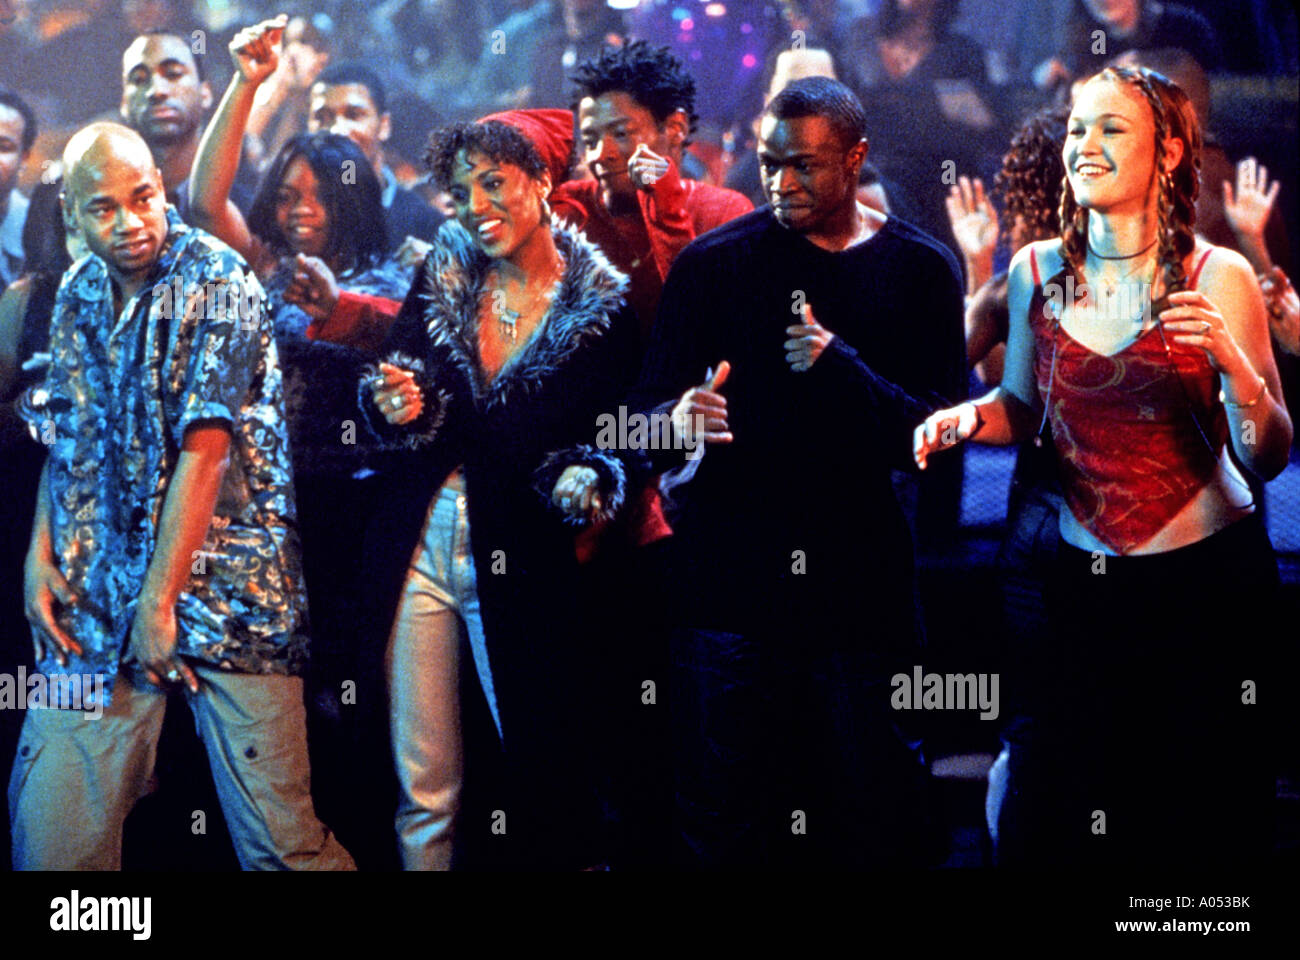 SAVE THE LAST DANCE 2001 Paramount film Foto de stock